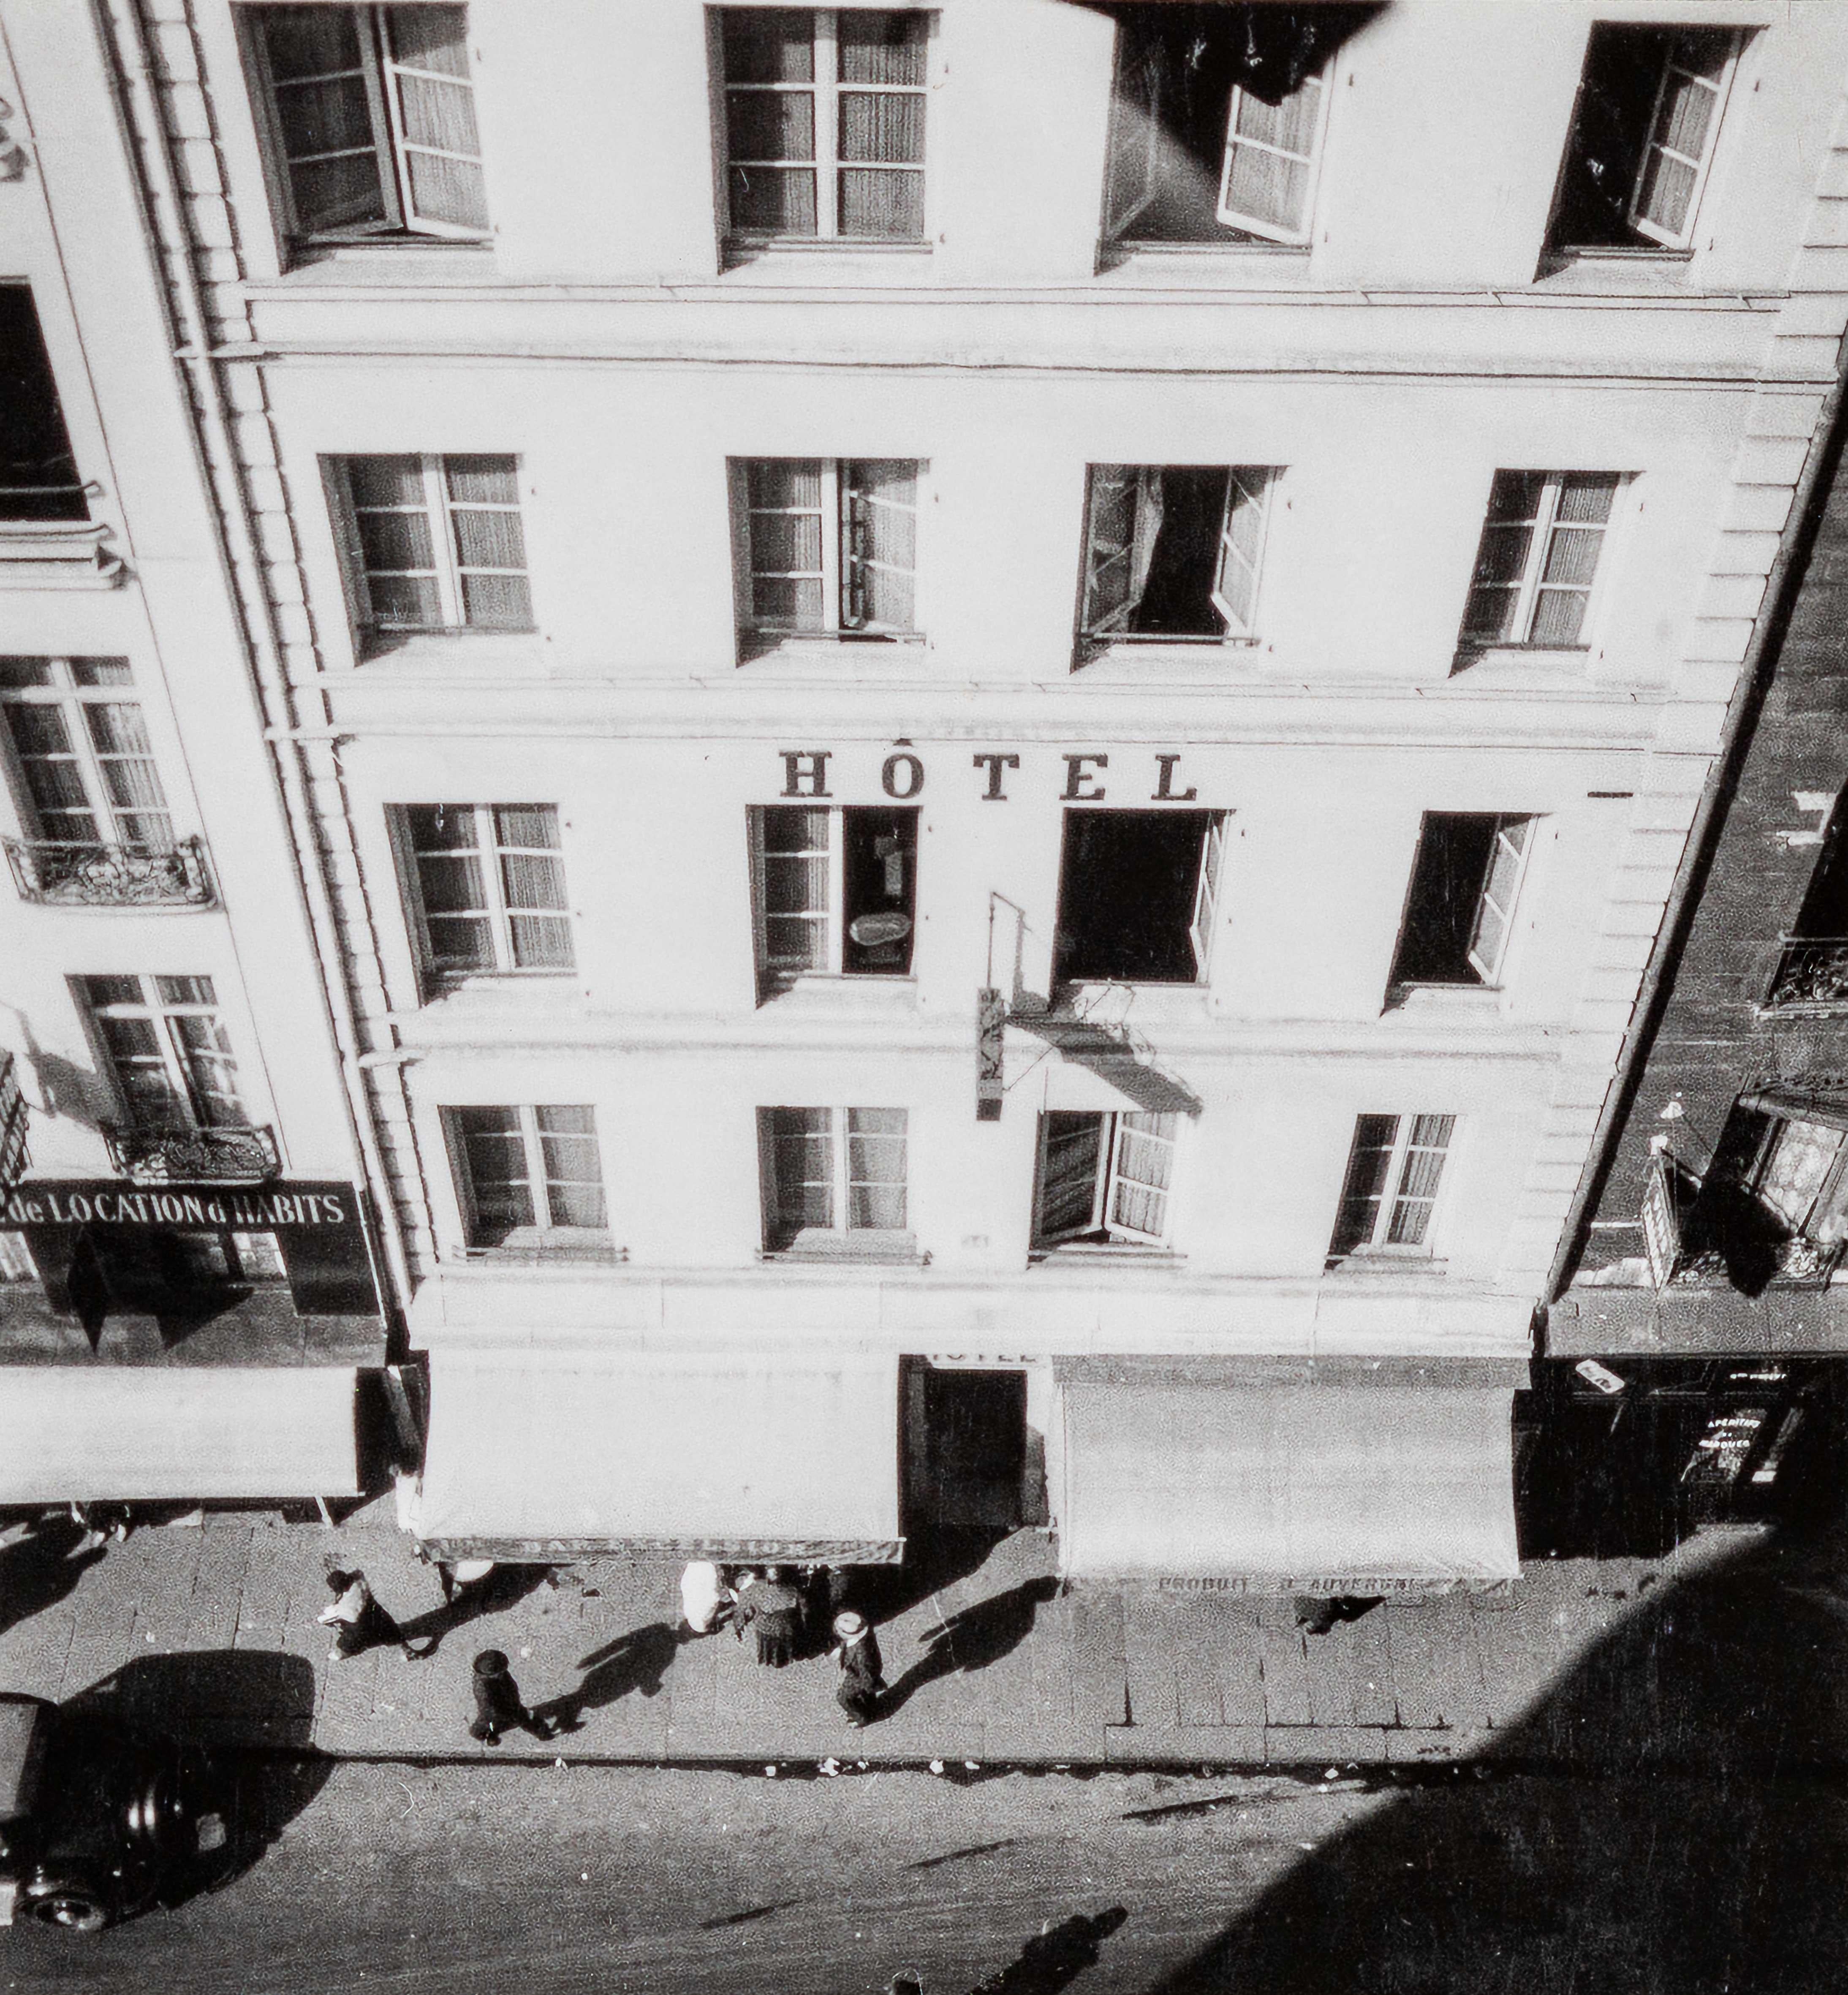 Dora Maar Black and White Photograph - Hotel Façade From Above, Paris, (Façade de l'Hôtel en Plongée, Paris) I